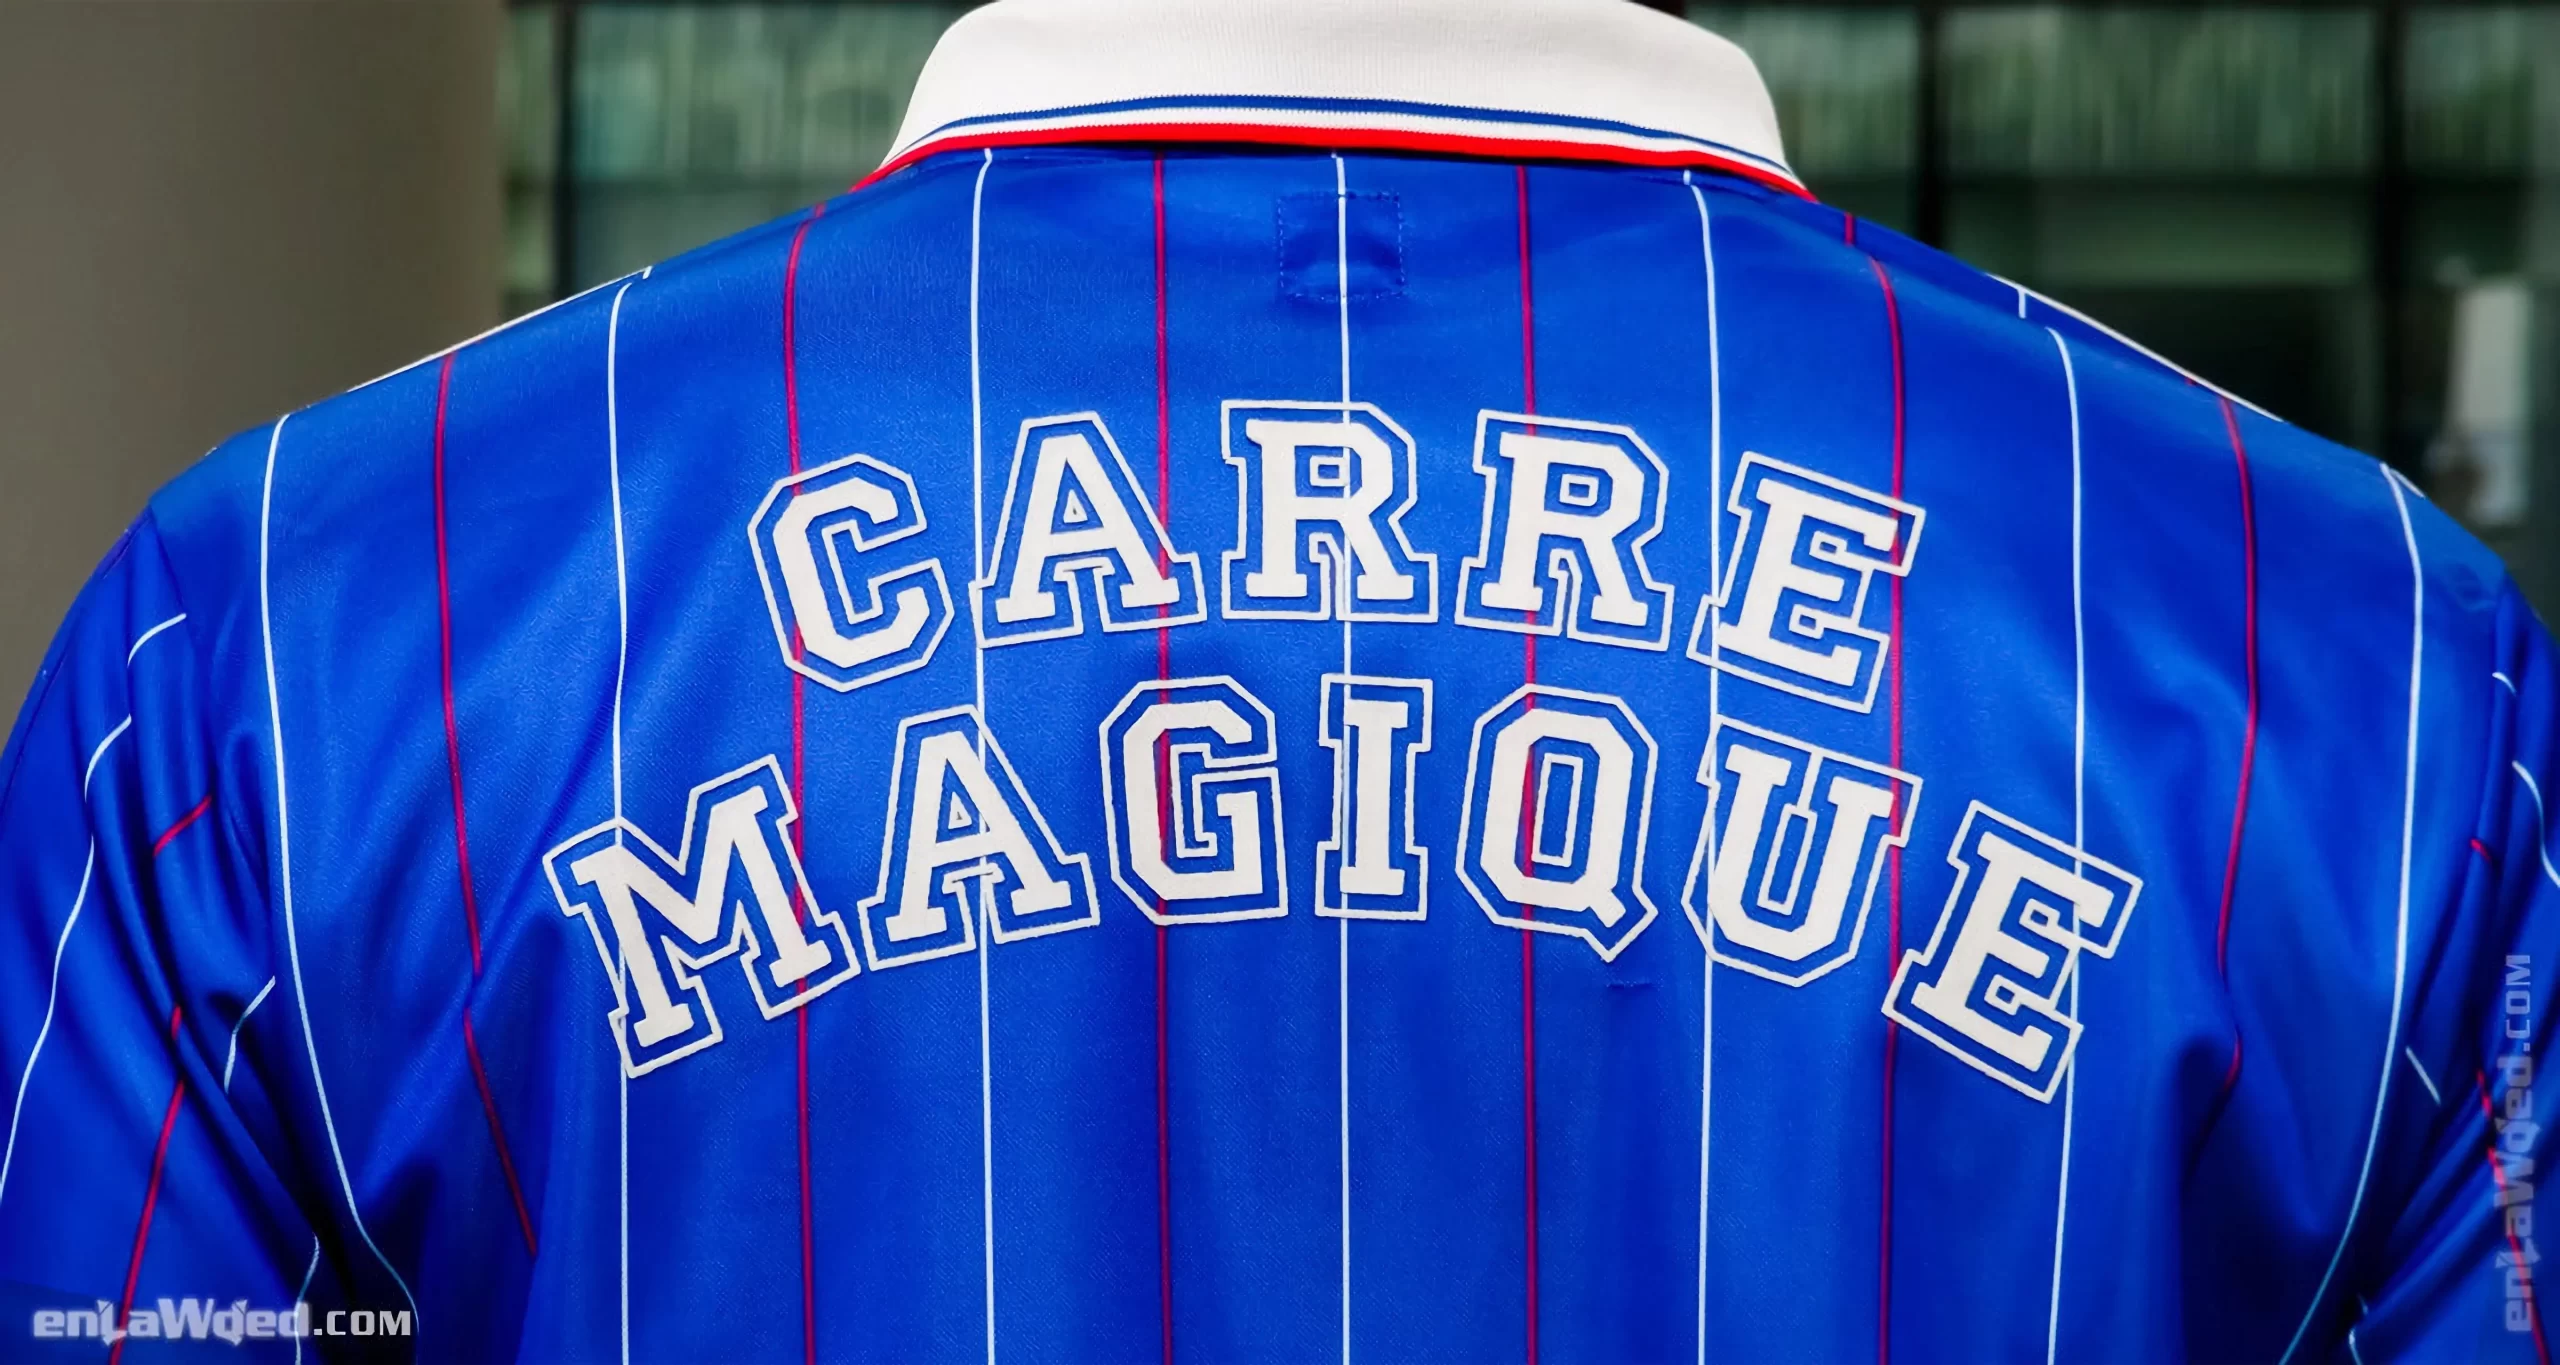 Men’s 2005 France ’82 Carre Magique Jersey by Adidas: Devoted (EnLawded.com file #lmchk90387ip2y122974kg9st)